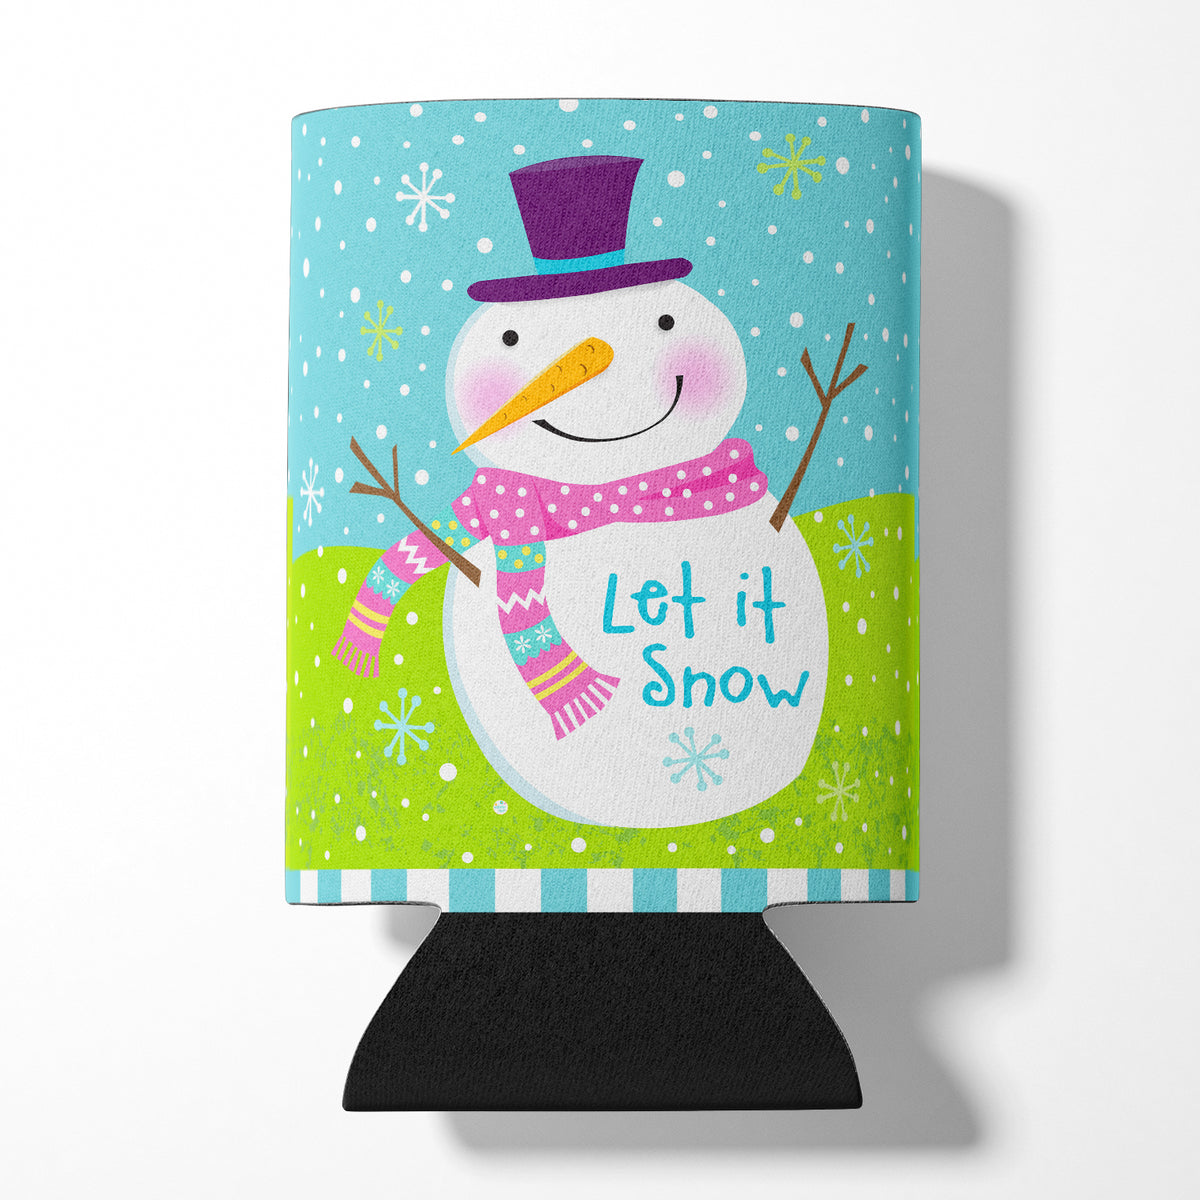 Christmas Snowman Let it Snow Can or Bottle Hugger VHA3017CC